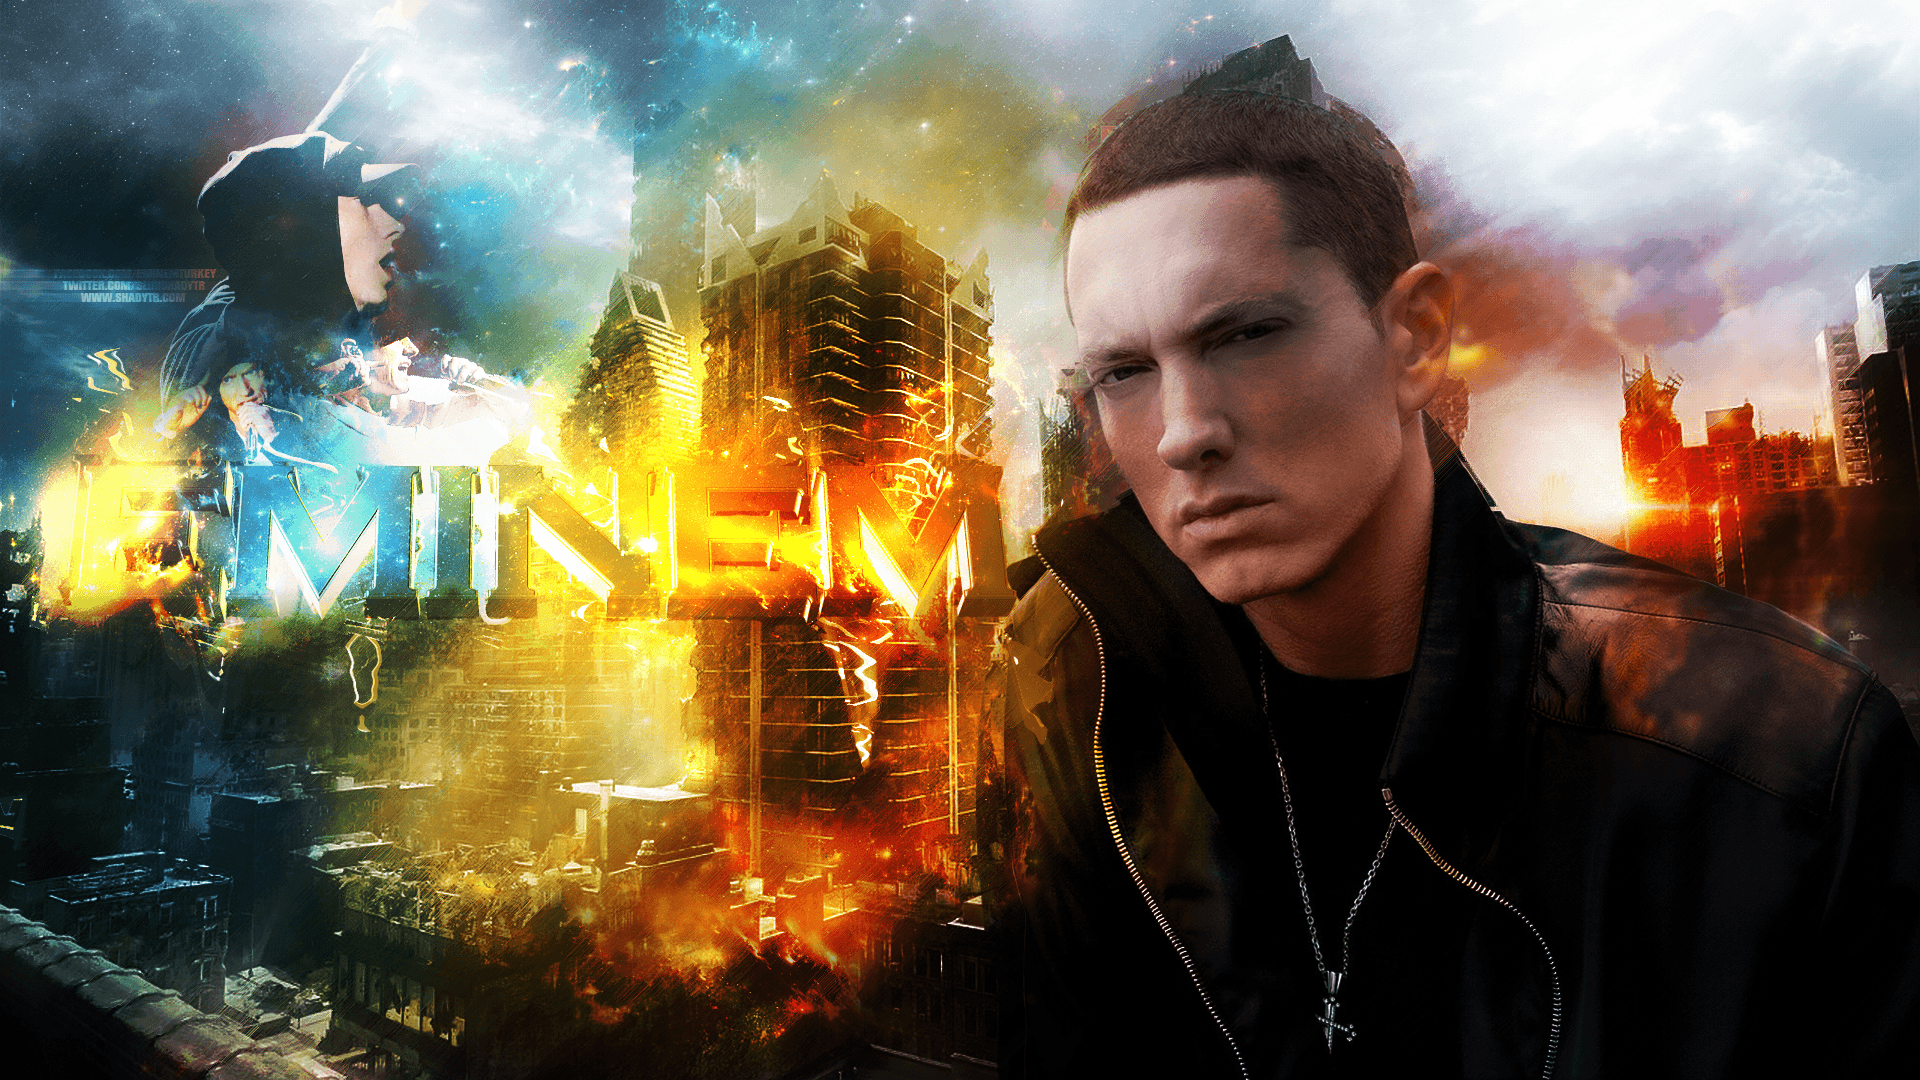 EMINEM image Eminem HD wallpaper and background photo